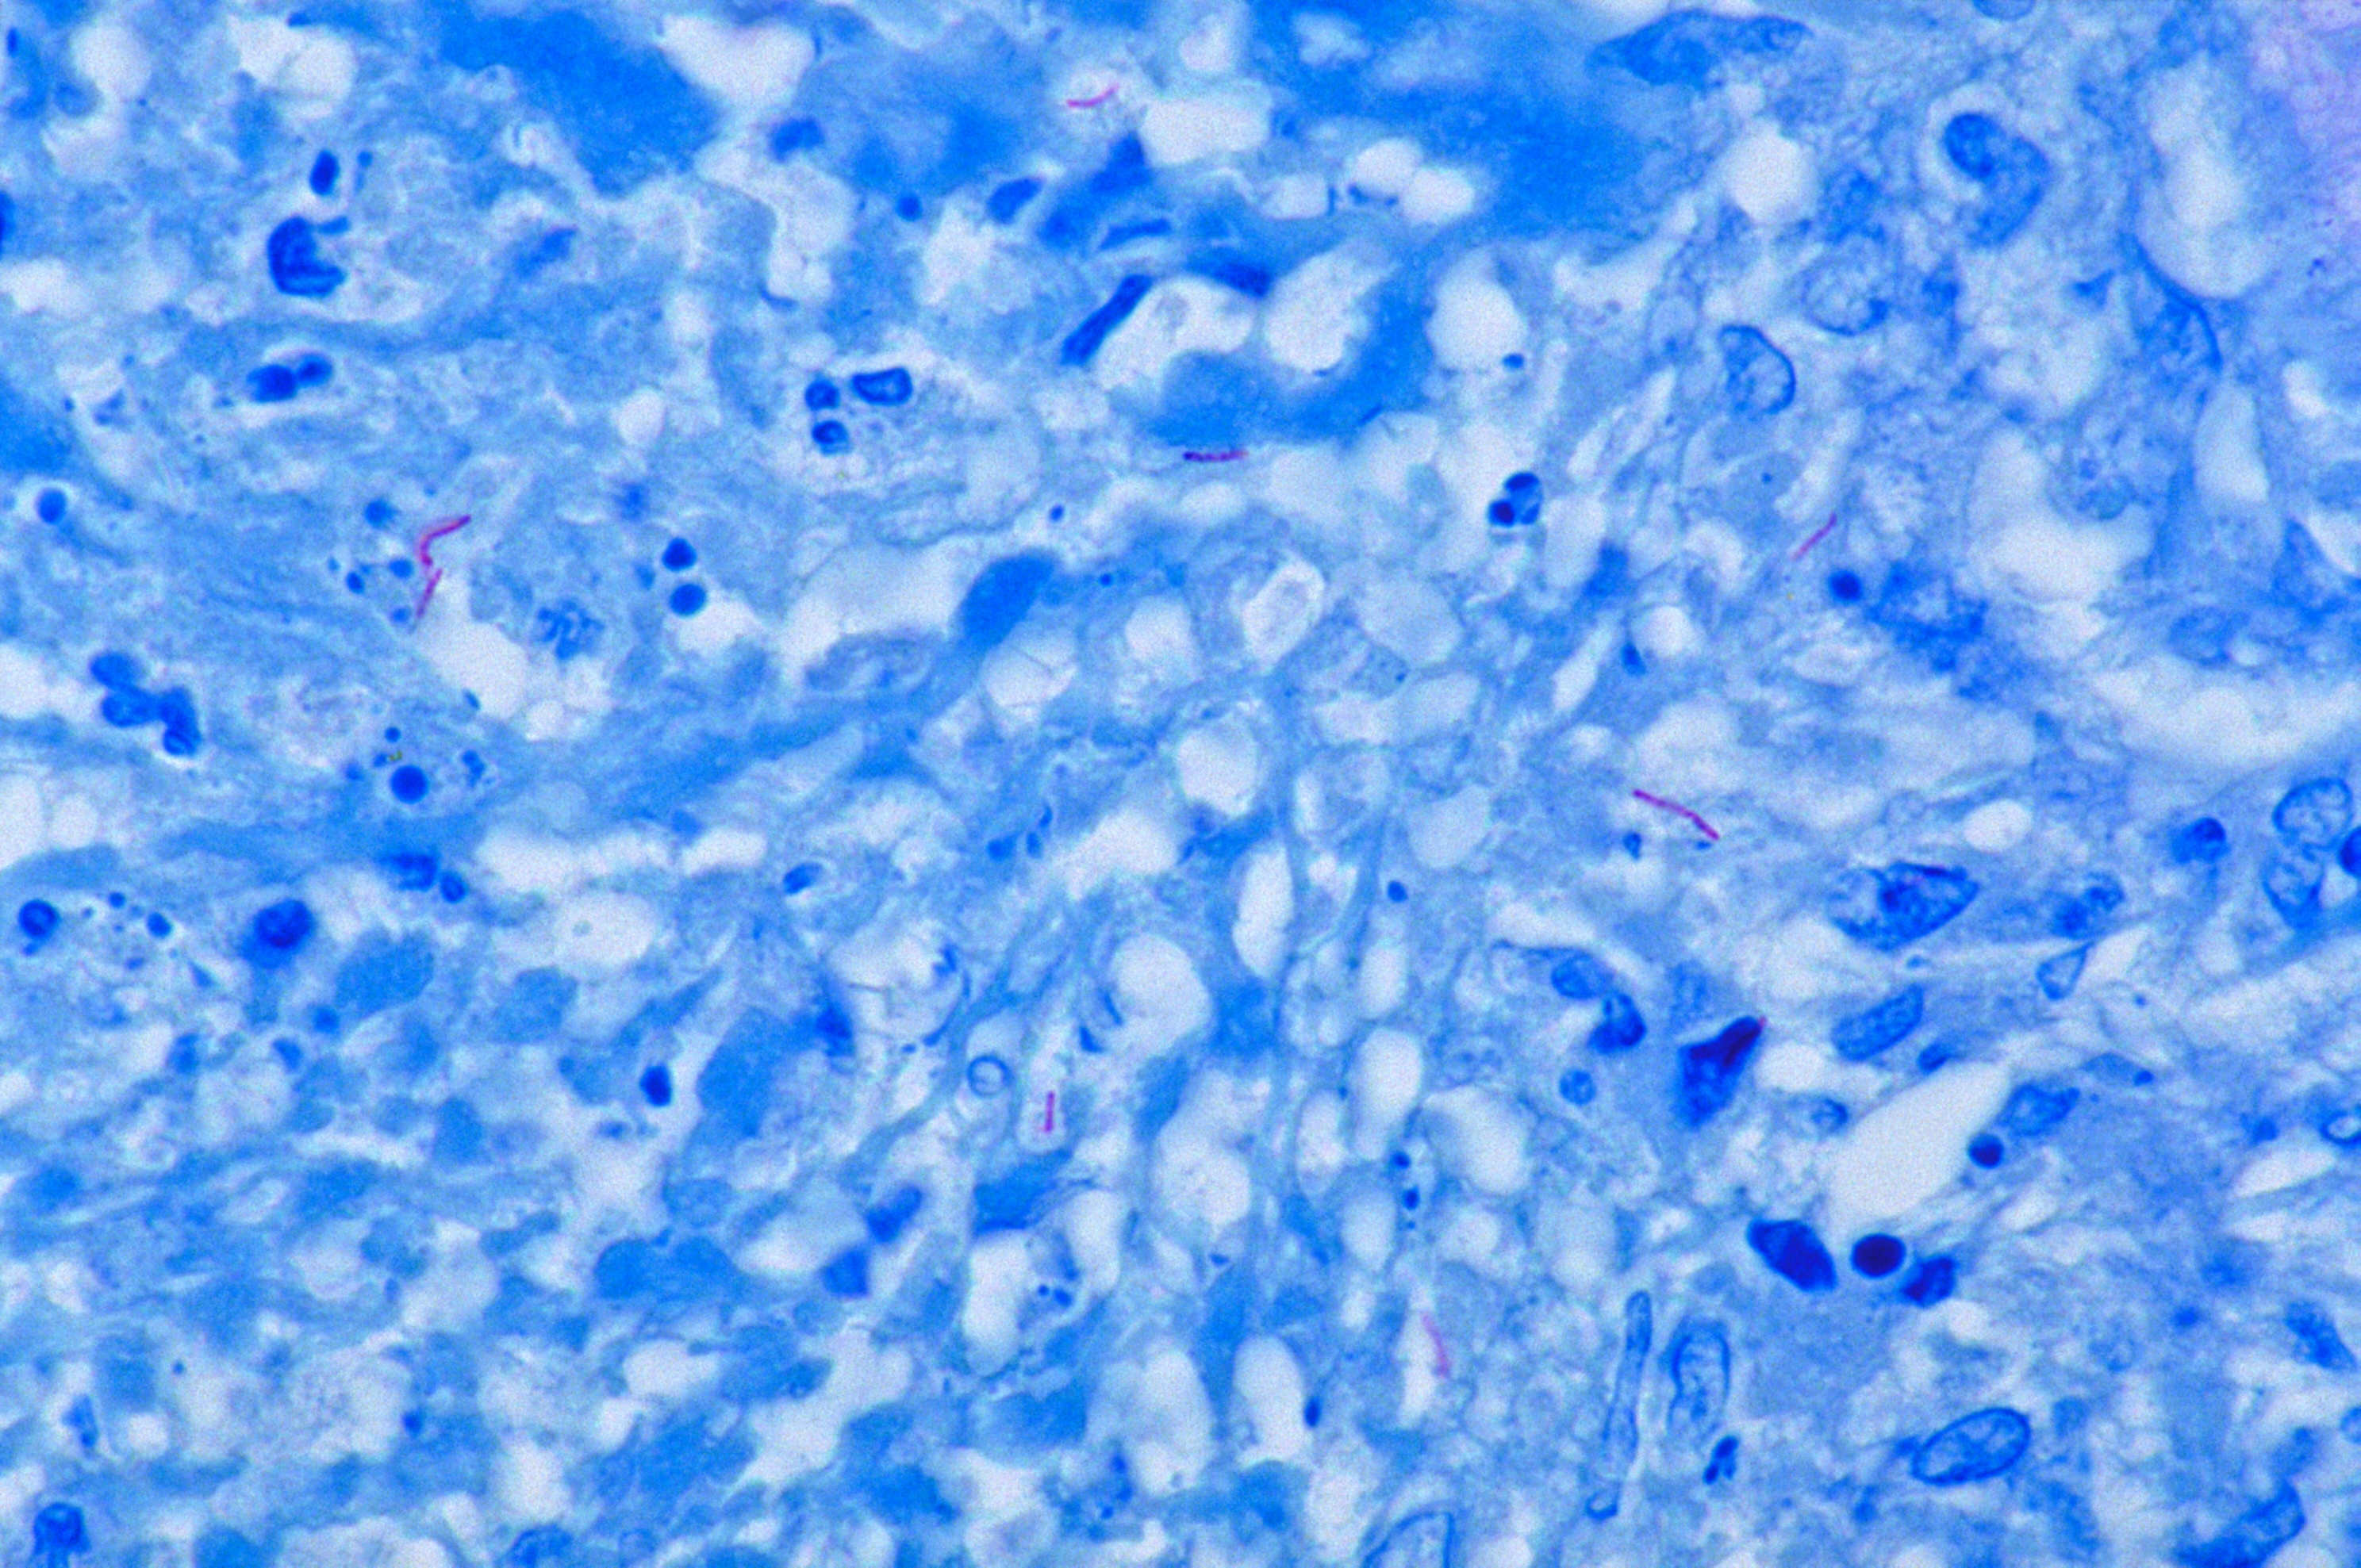 Mycobacterium tuberculosis Ziehl-Neelsen stain